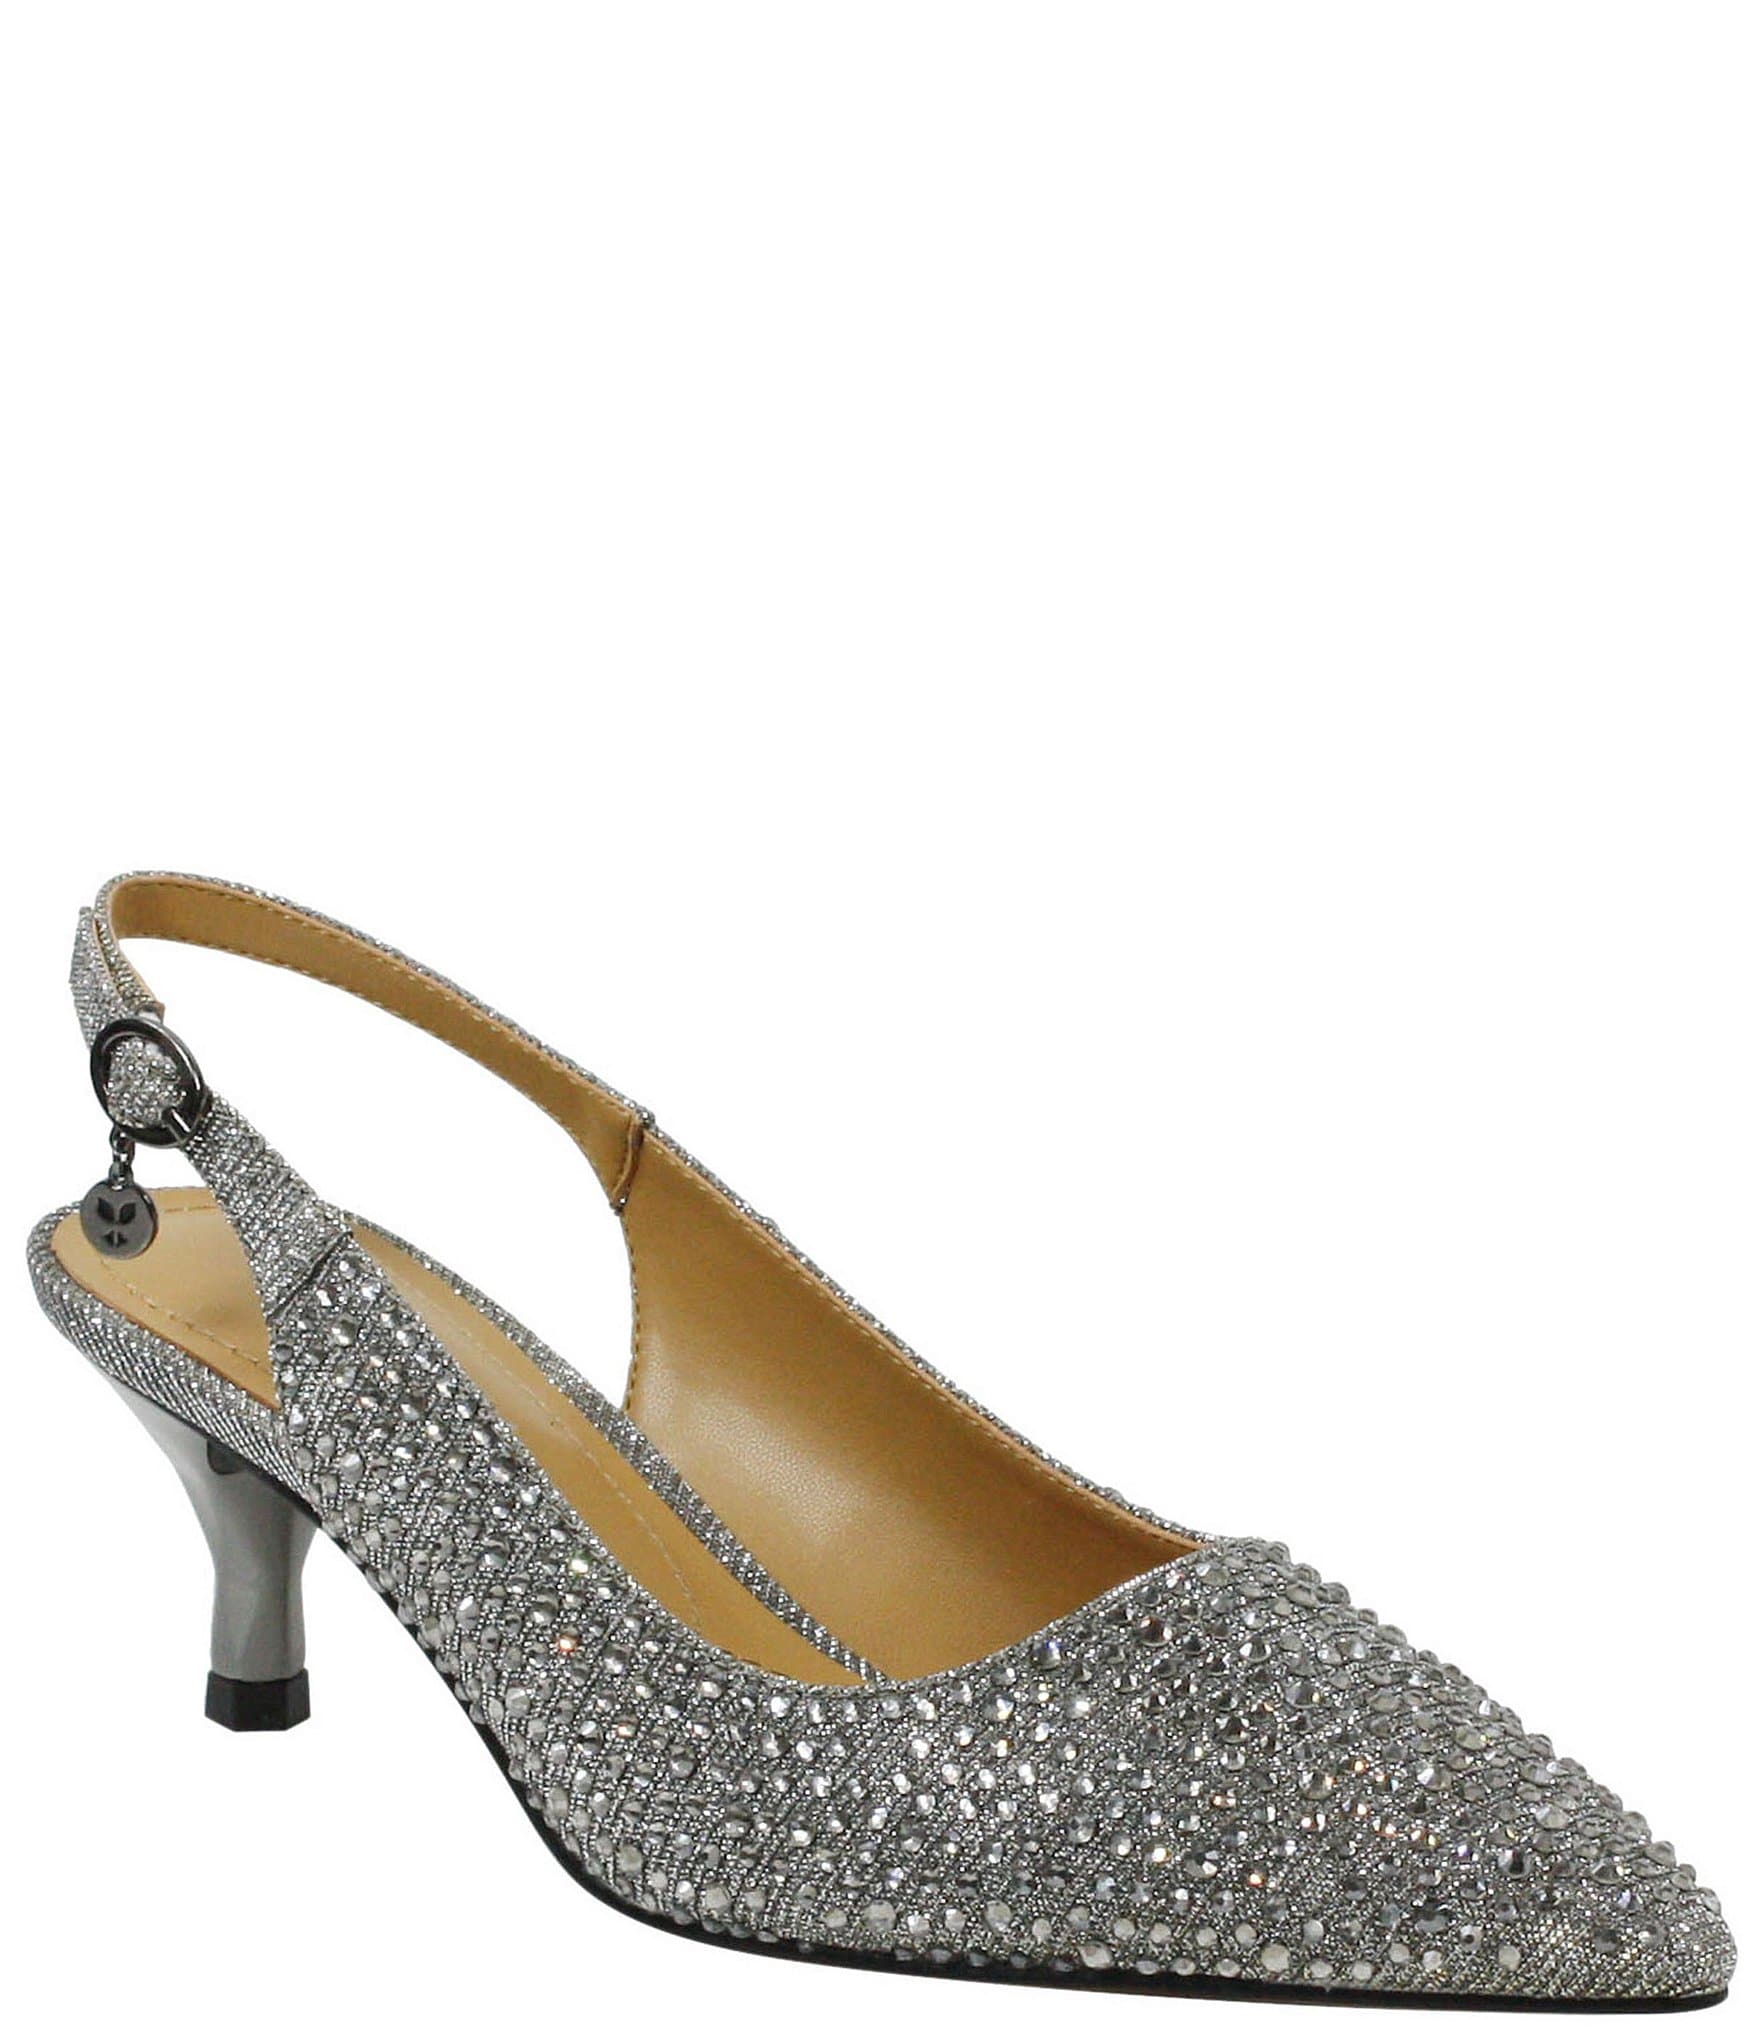  FIFSY Women Glitter Block Heel Sandals Pointed Toe Slingback  Pumps Sparkle Shoes US5 EU35